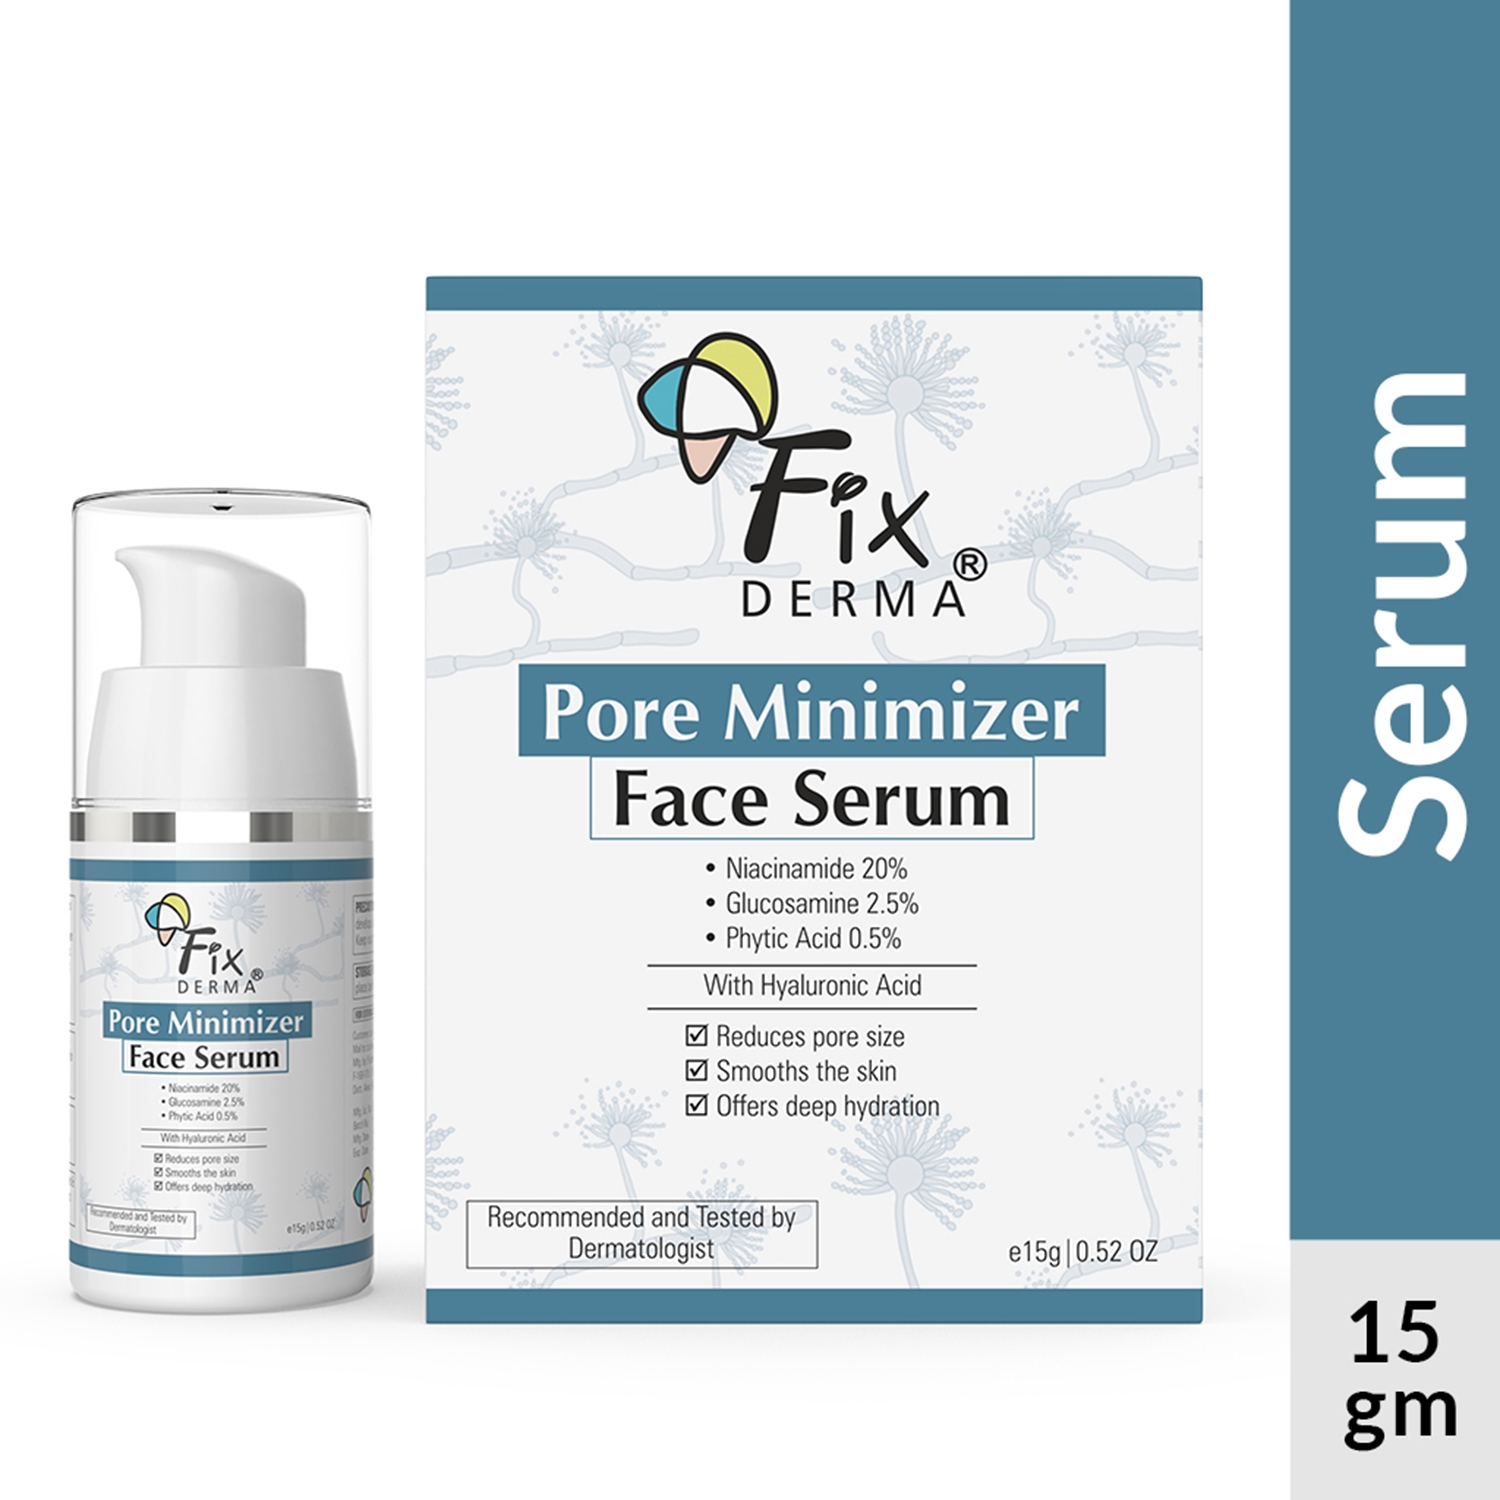 Fixderma | Fixderma 20% Niacinamide with 2.5% Glucosamine & Hyaluronic Acid for Face Pore Minimizer Serum (15g)